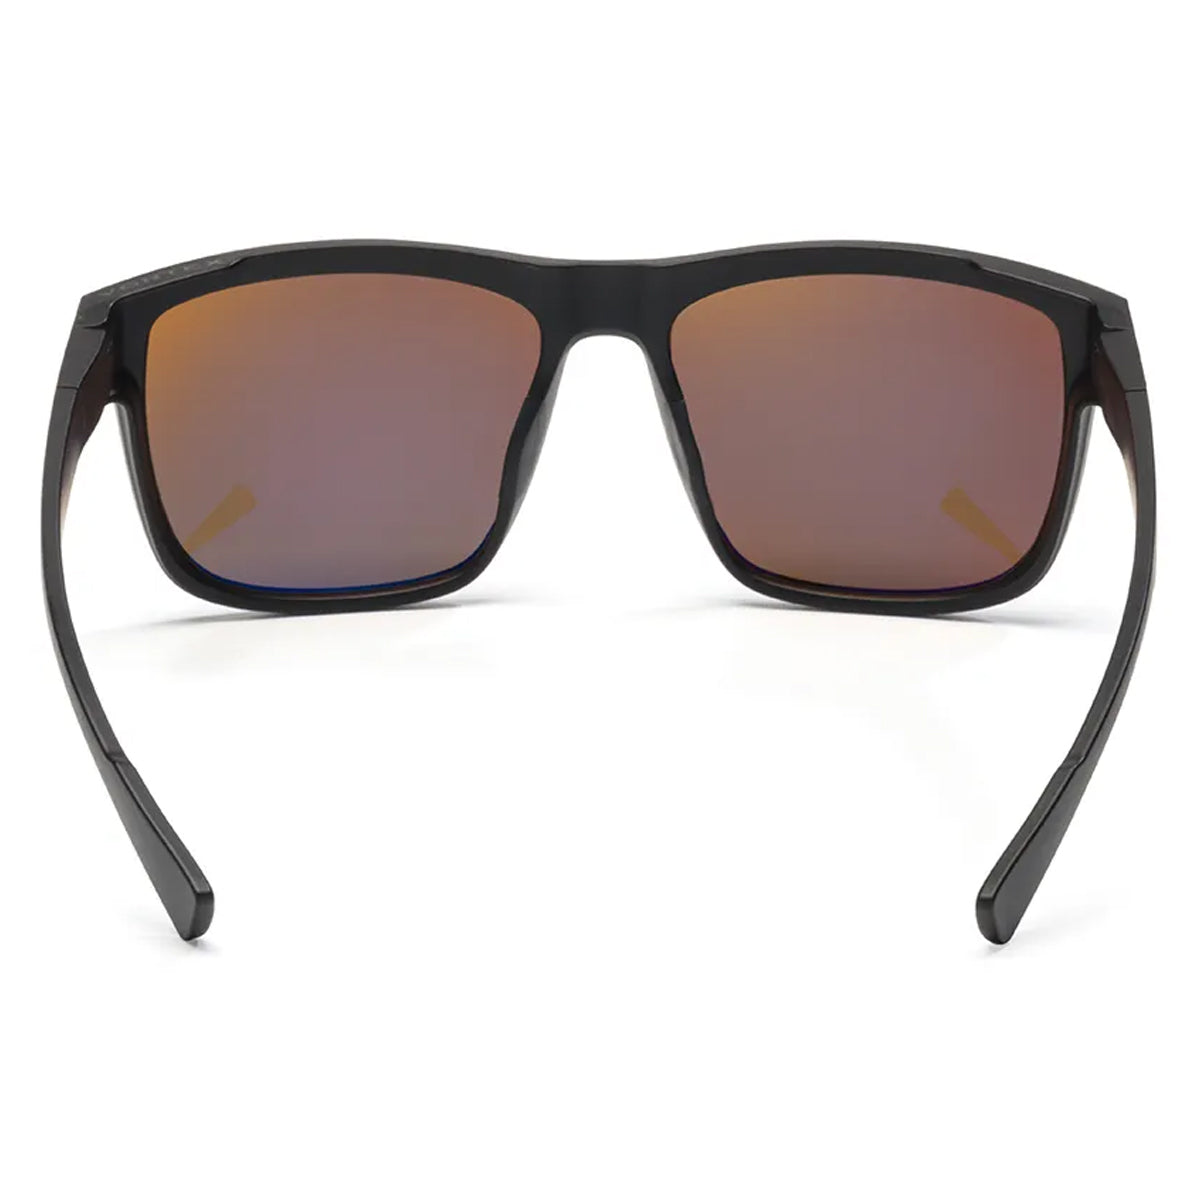 Vortex Men's Banshee Sunglasses in Black & Amber by GOHUNT | Vortex Optics - GOHUNT Shop